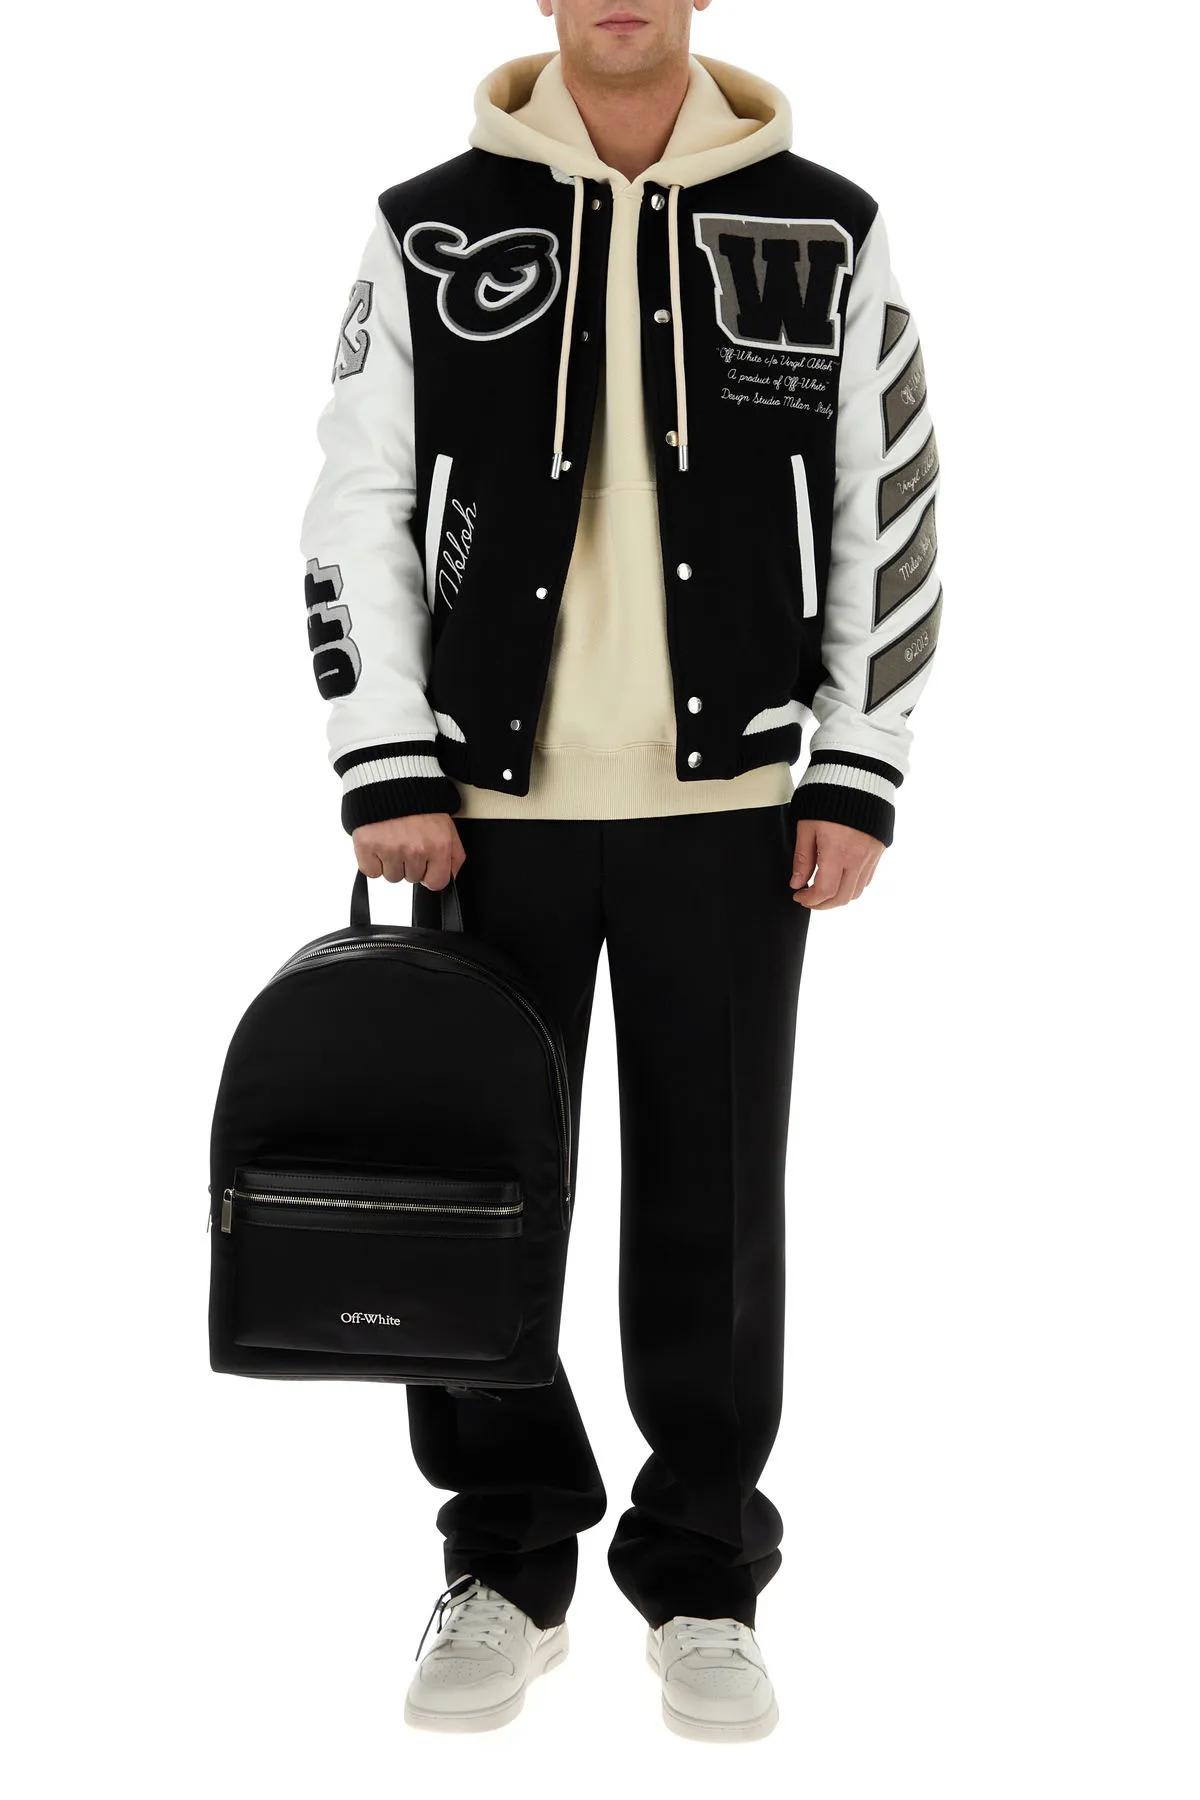 Shop Off-white Black Nylon Core Backpack